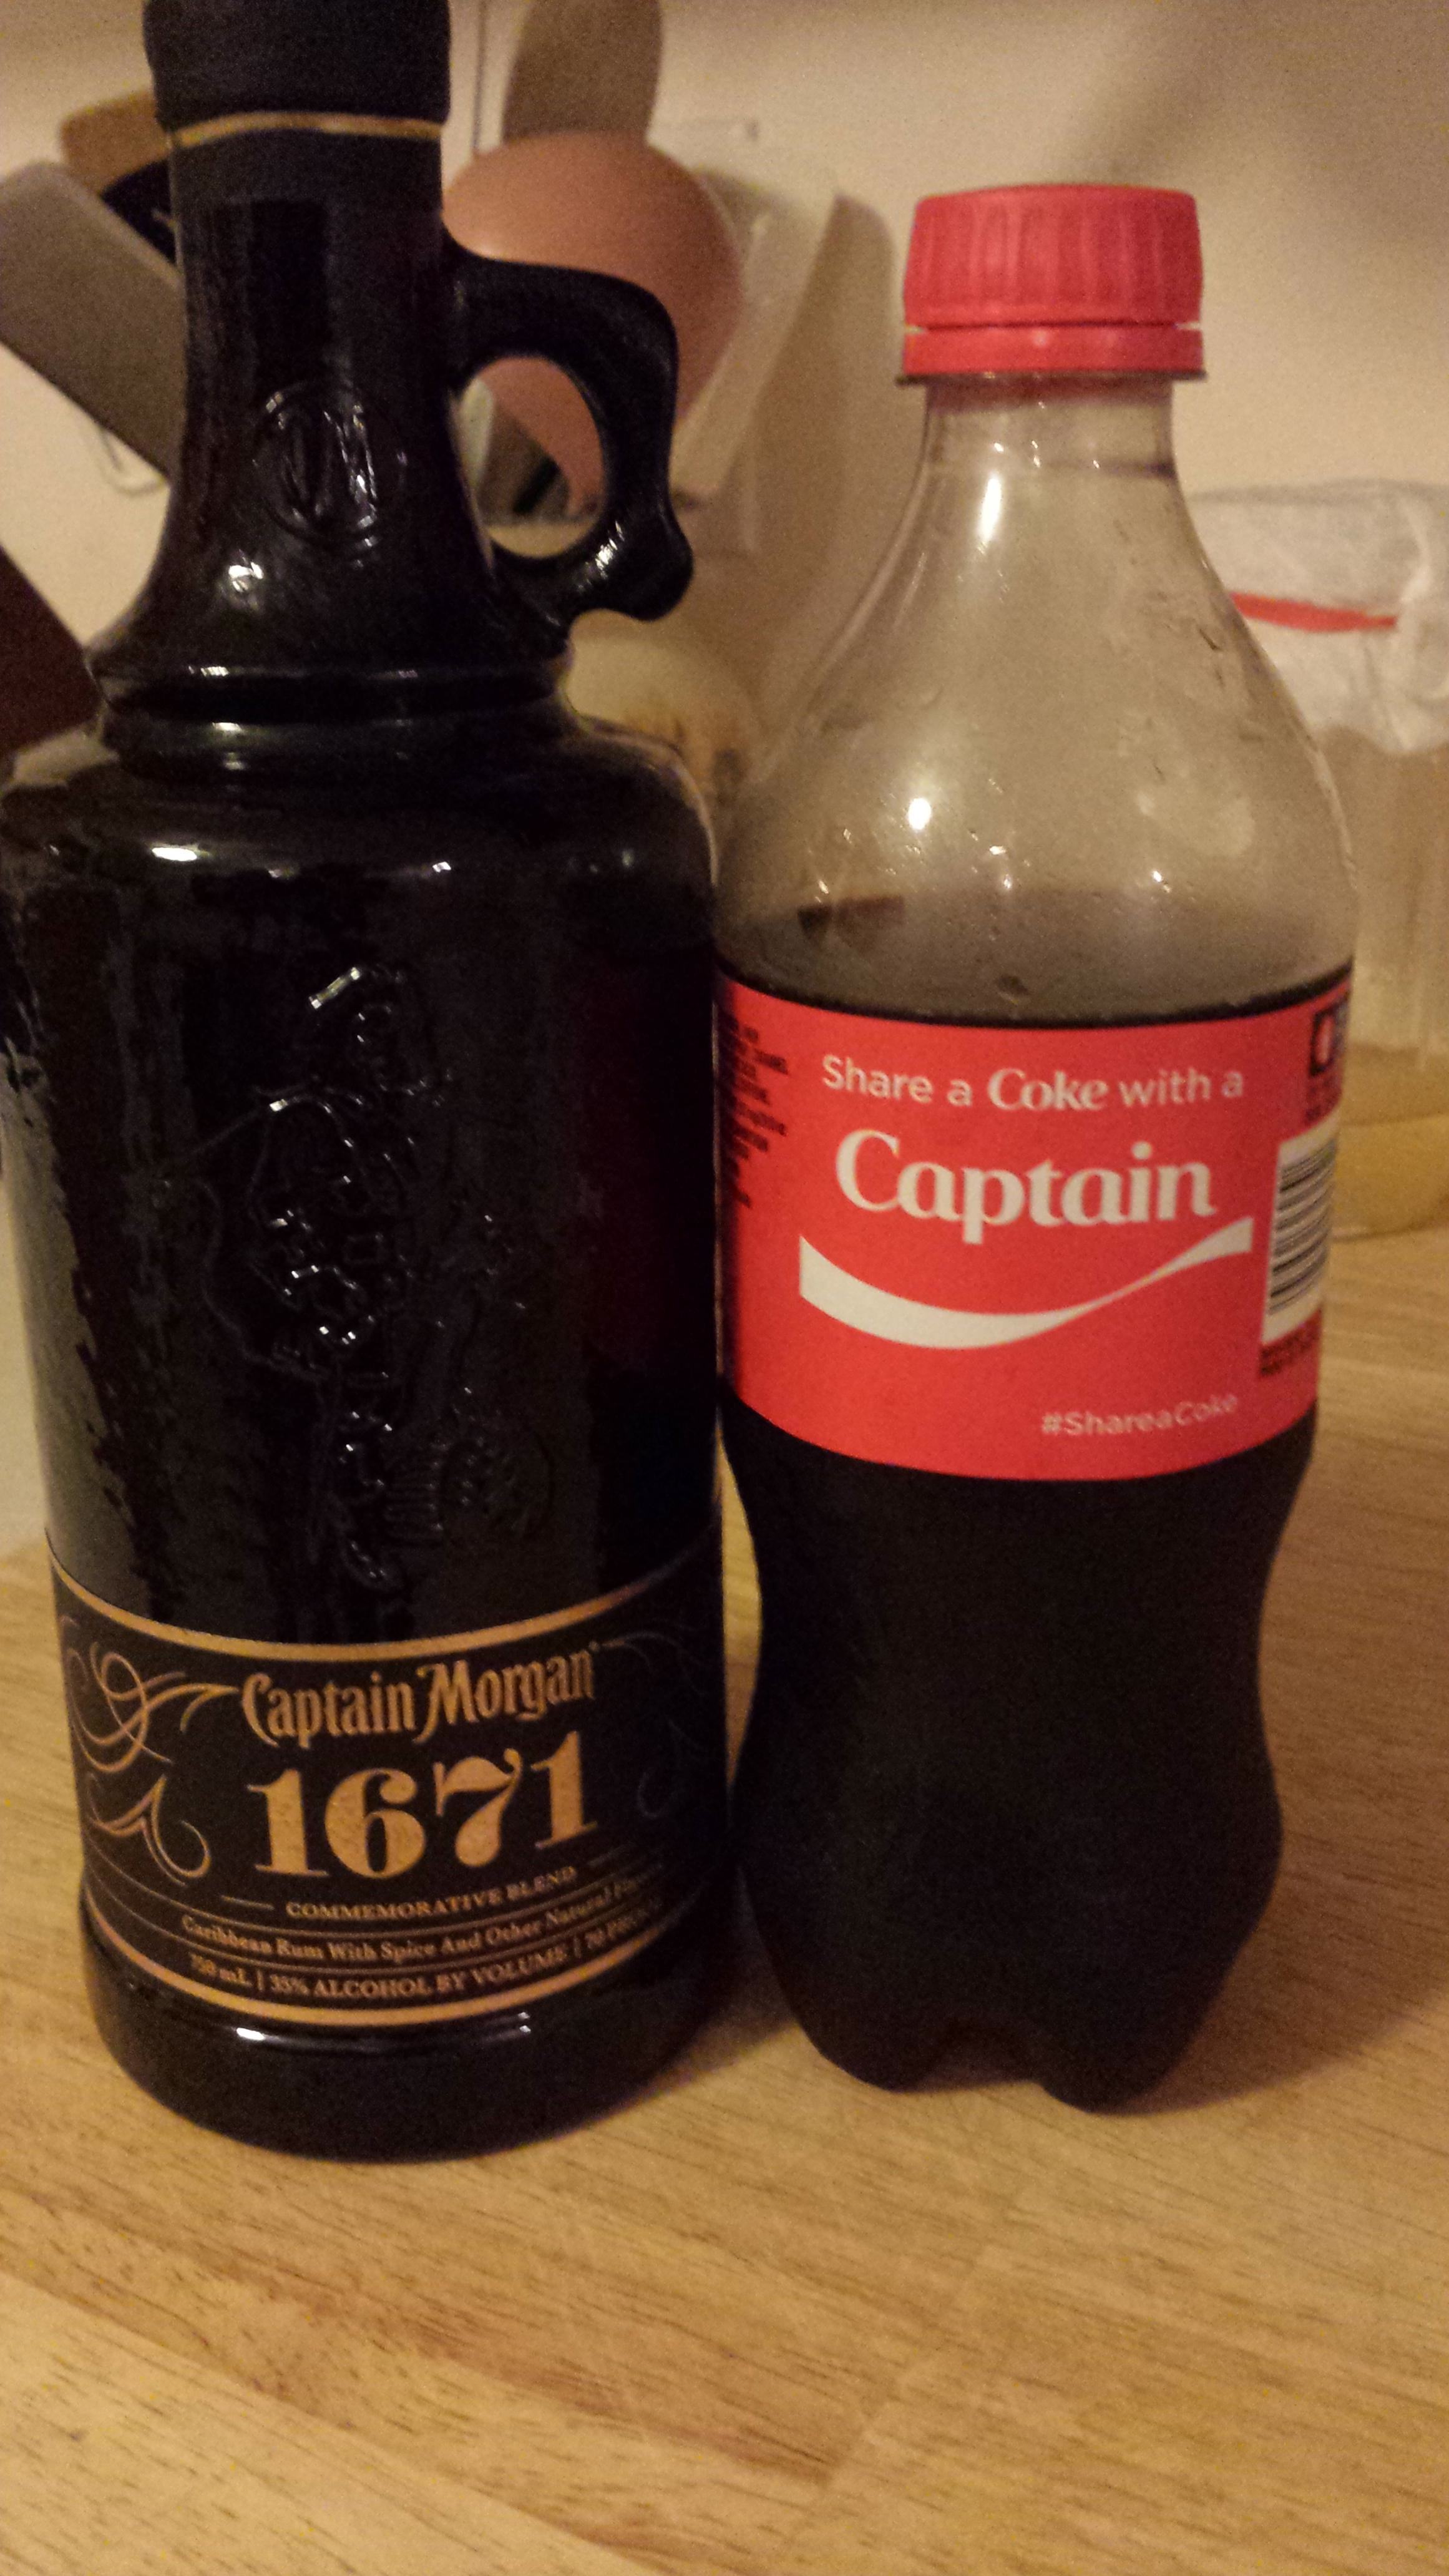 liqueur - a Coke with Captain Captain Morgan 1691